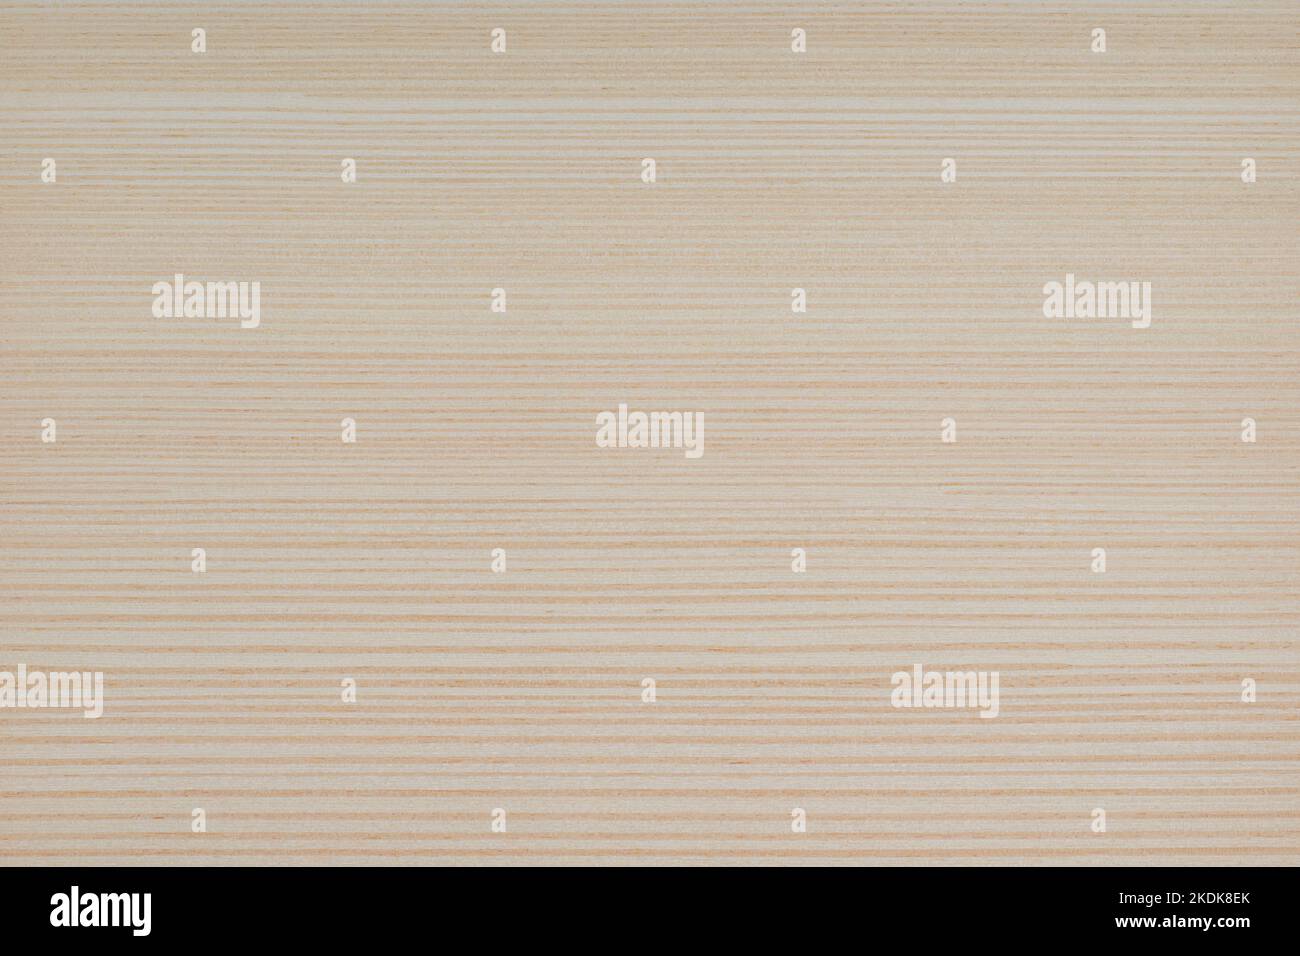 Pine wood panel texture pattern Stock Photo